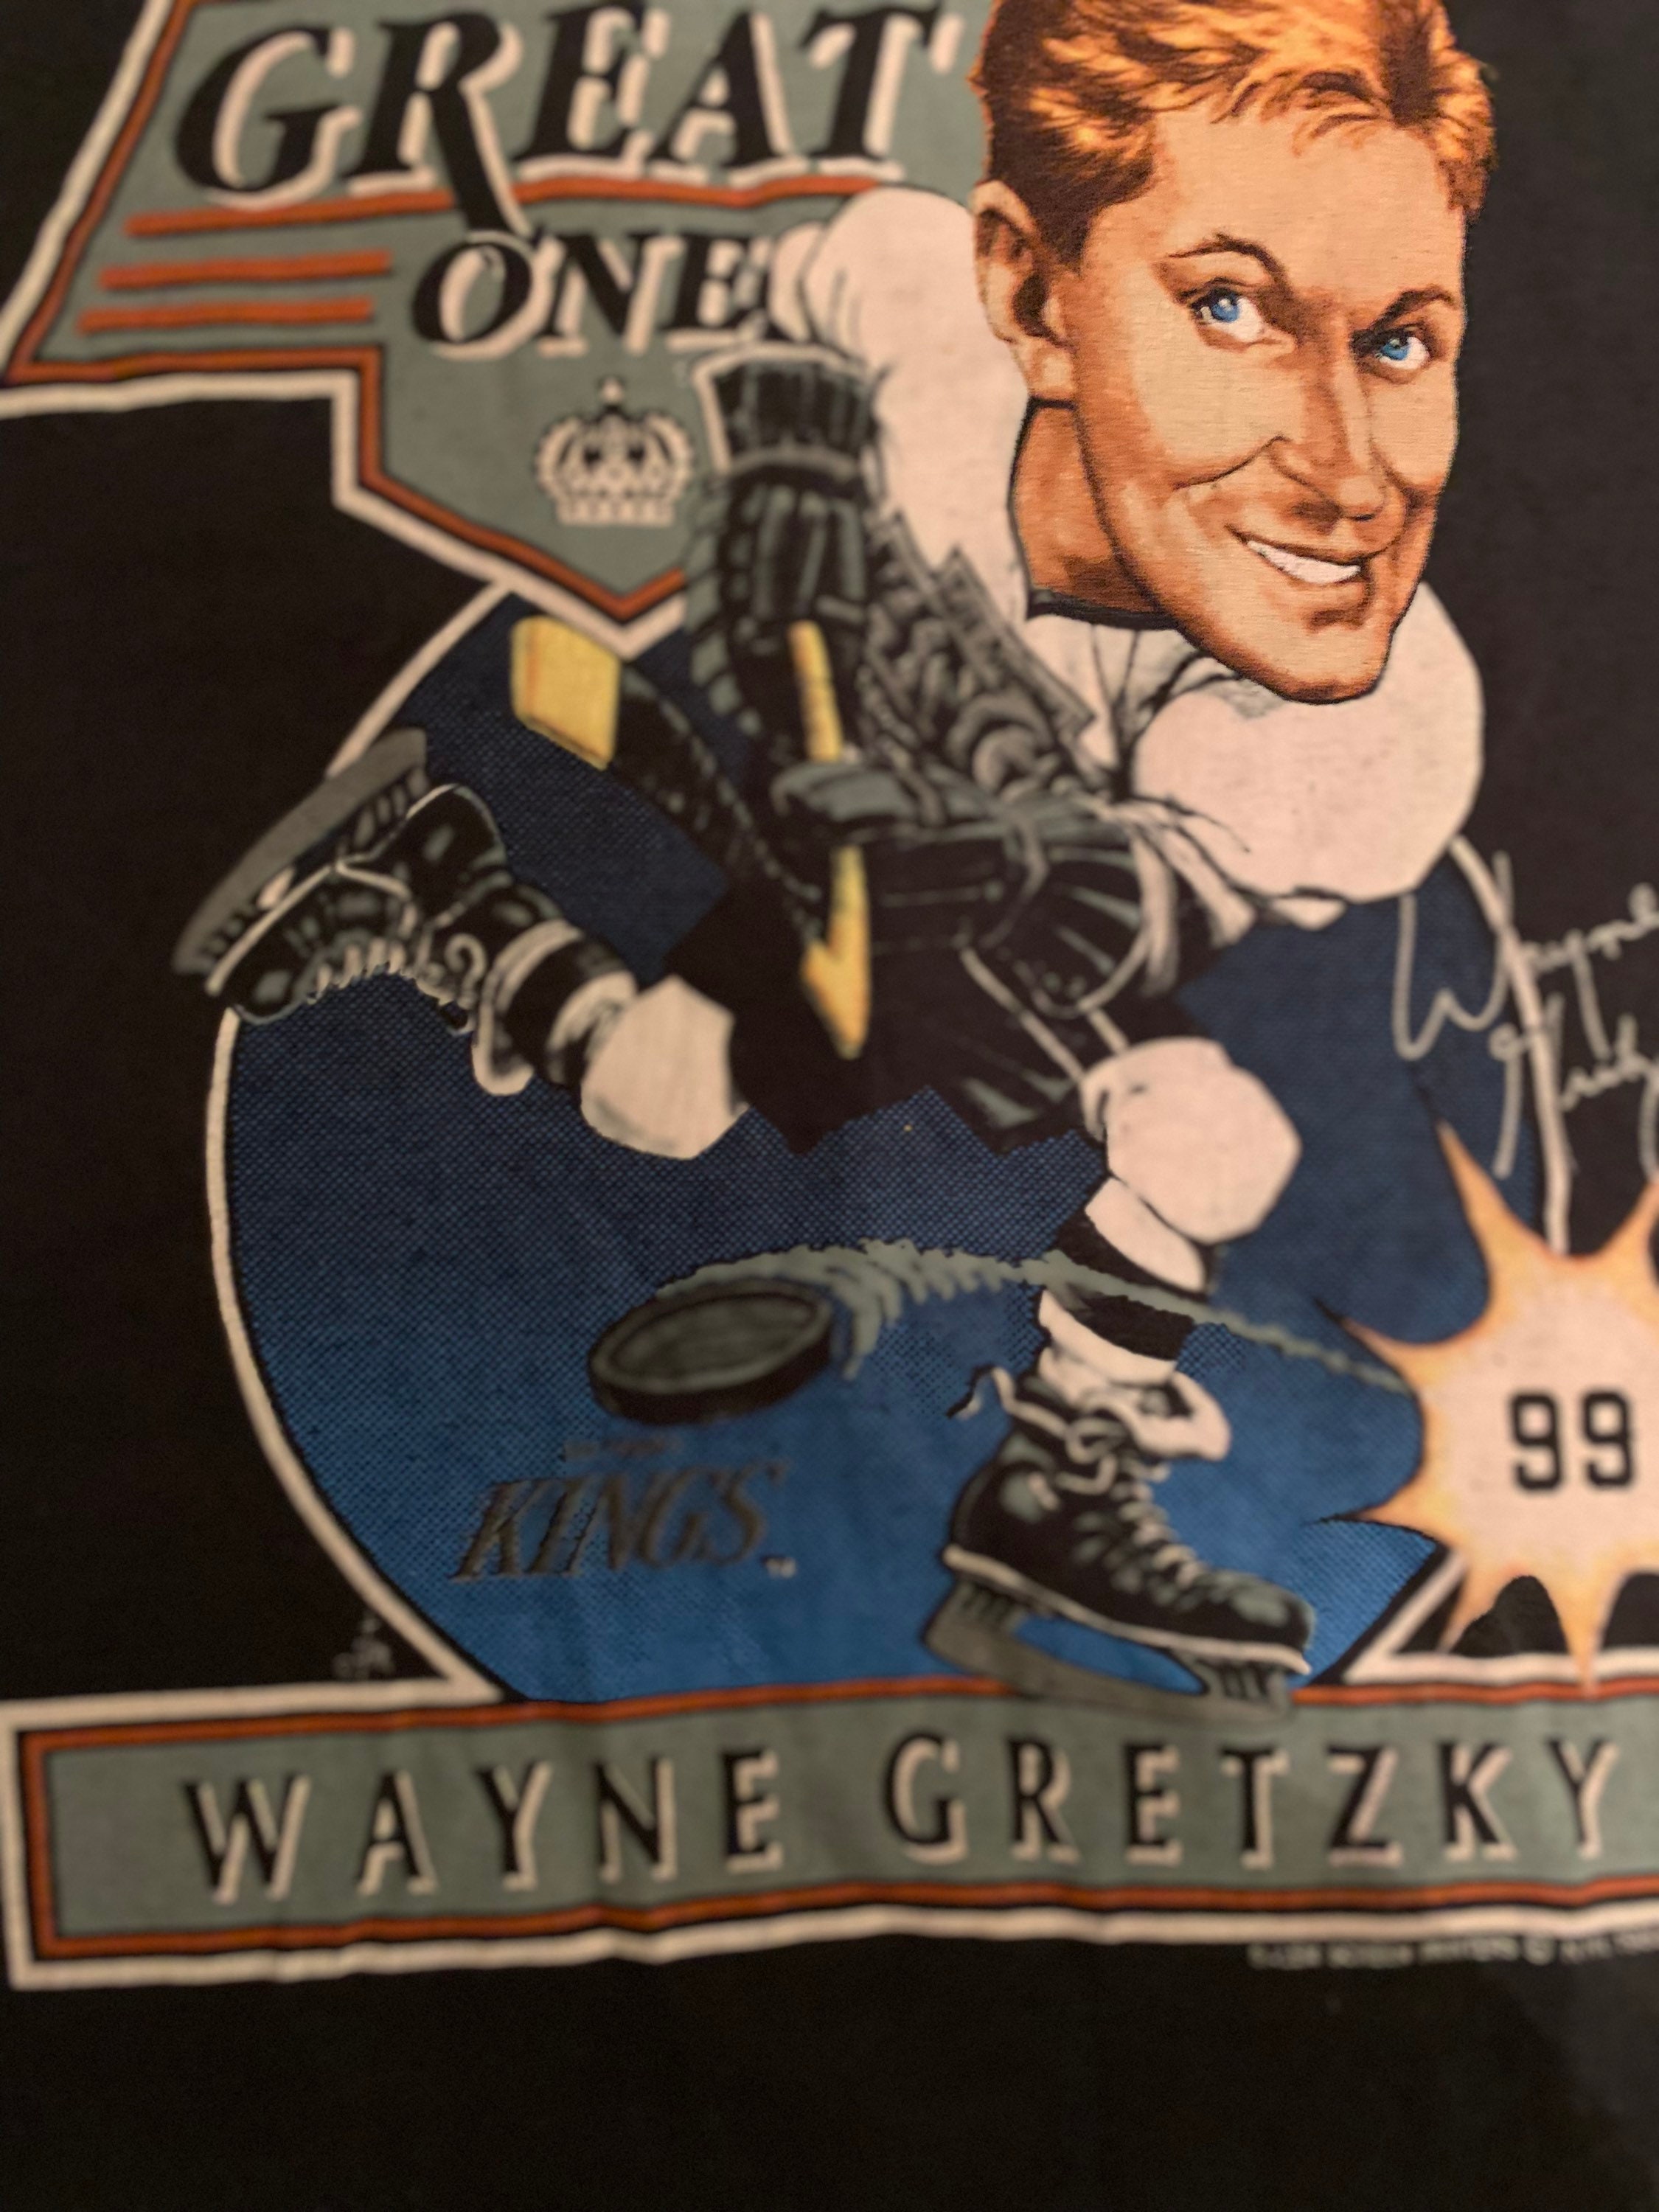 Wayne Gretzky Kings Vintage T-shirt NHL Size Medium From 1988 